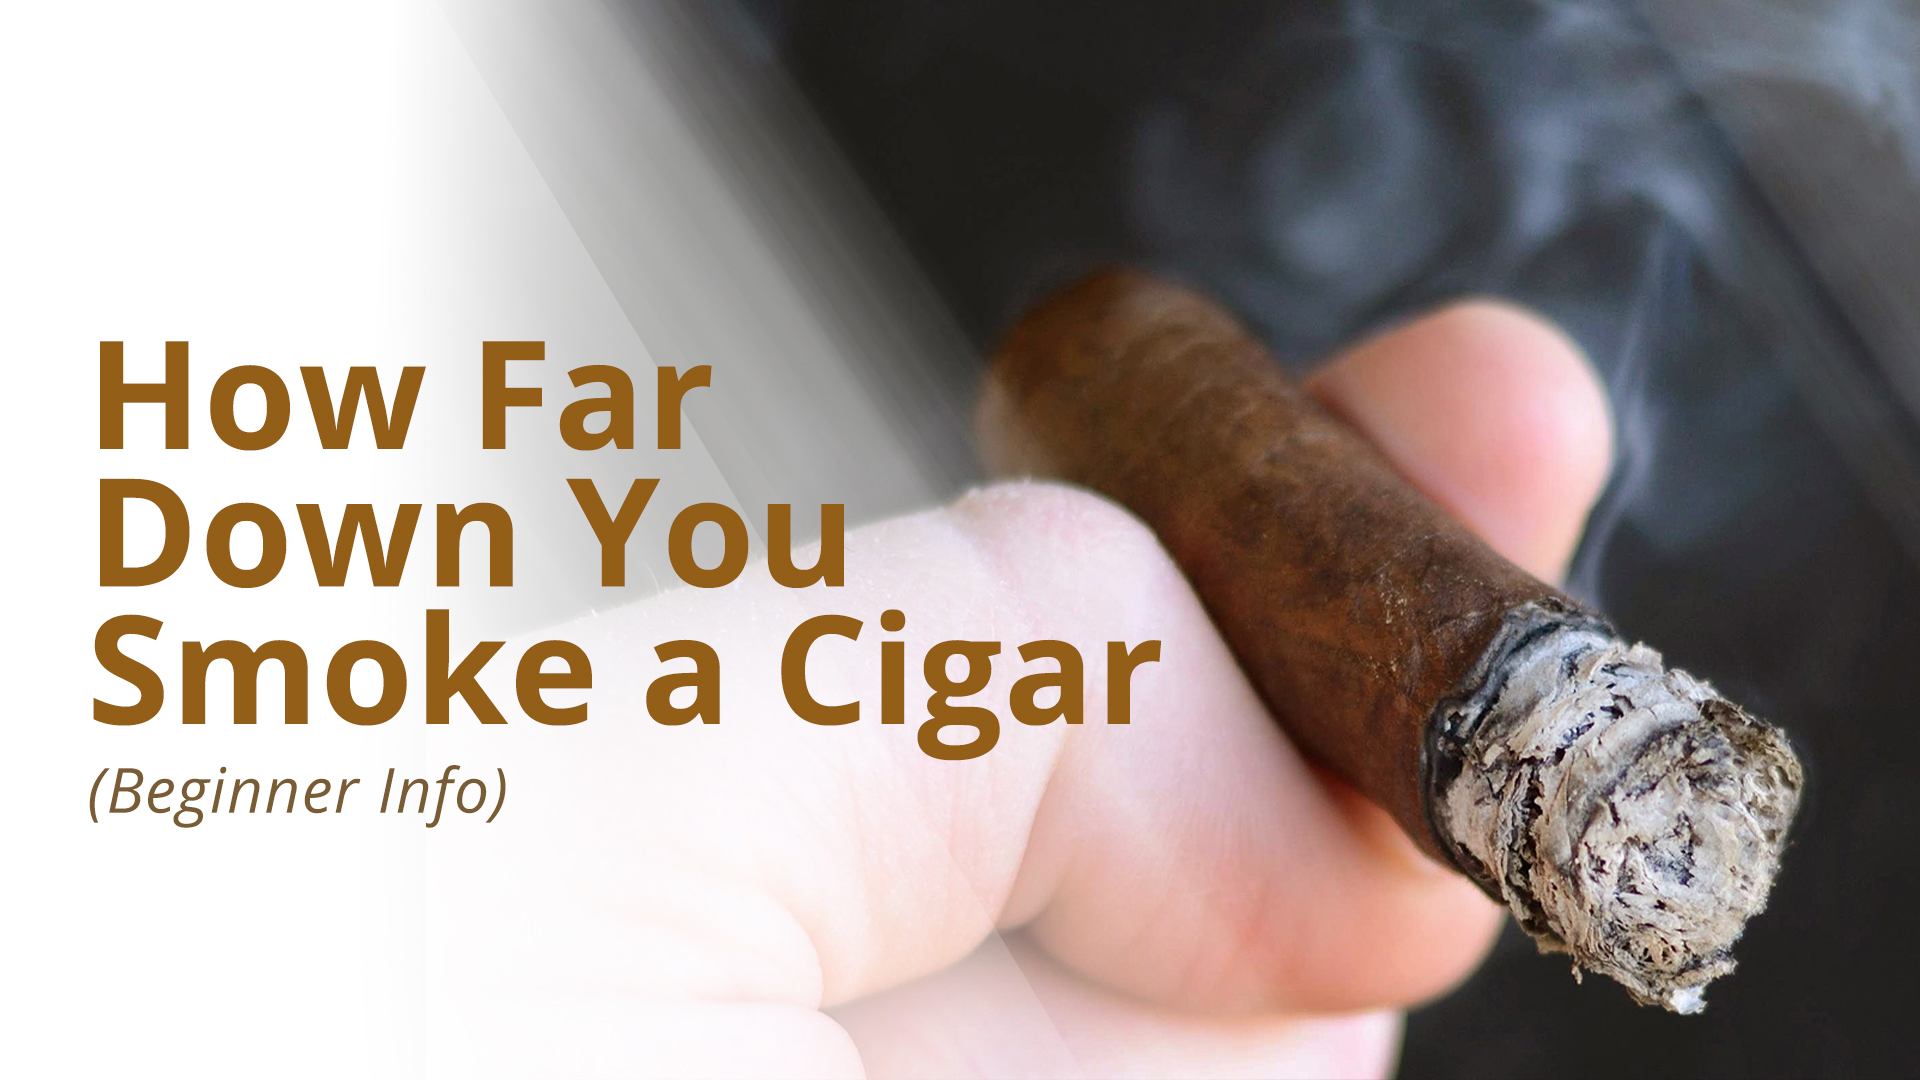 How far should you smoke a cigar